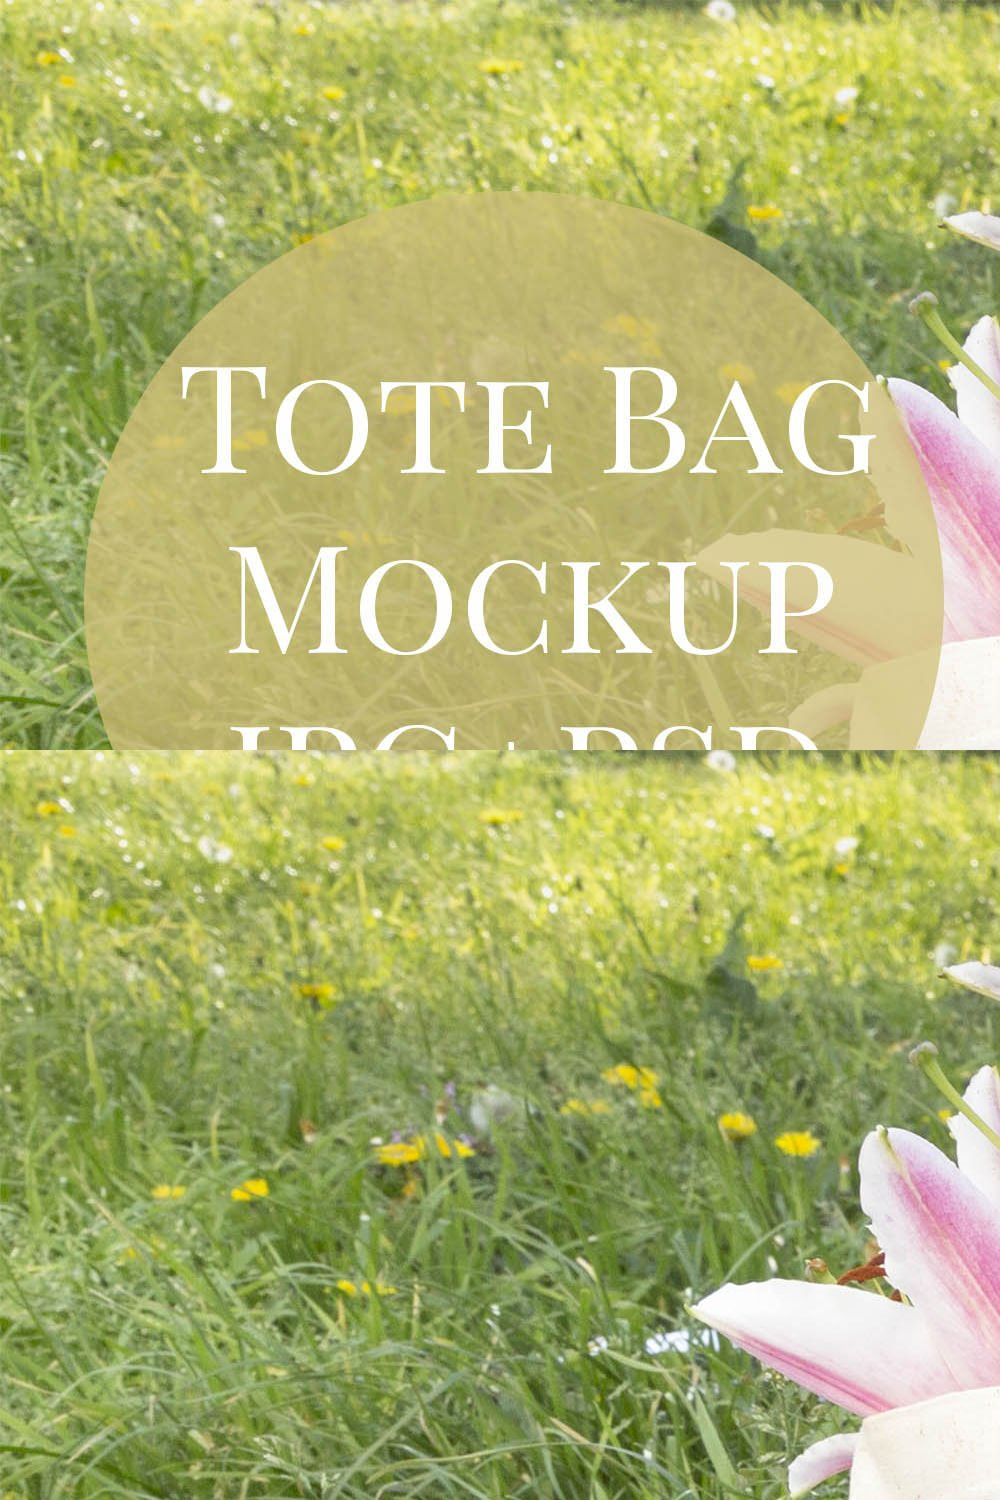 Tote Bag mockup - Yellow Dress pinterest preview image.